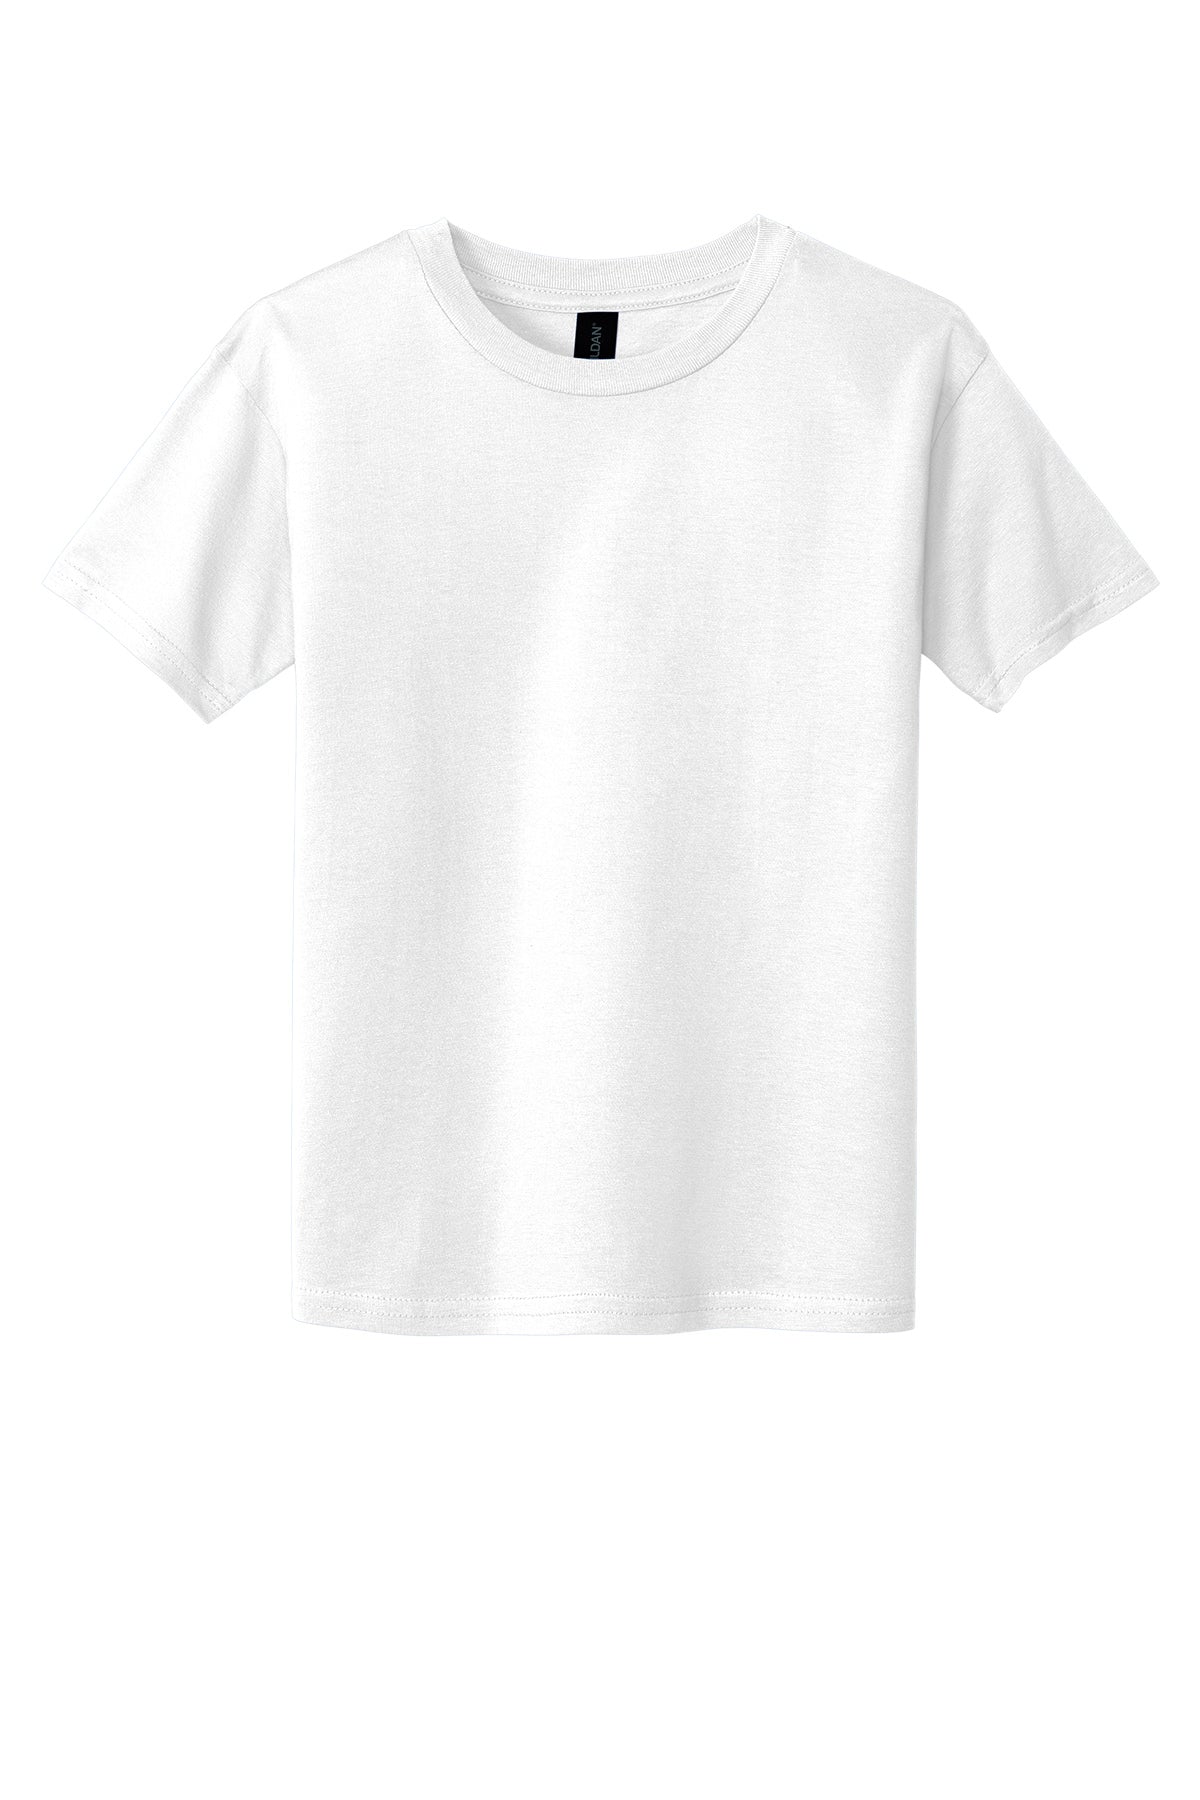 Gilden 64000B Youth T-Shirt Yth Small / White